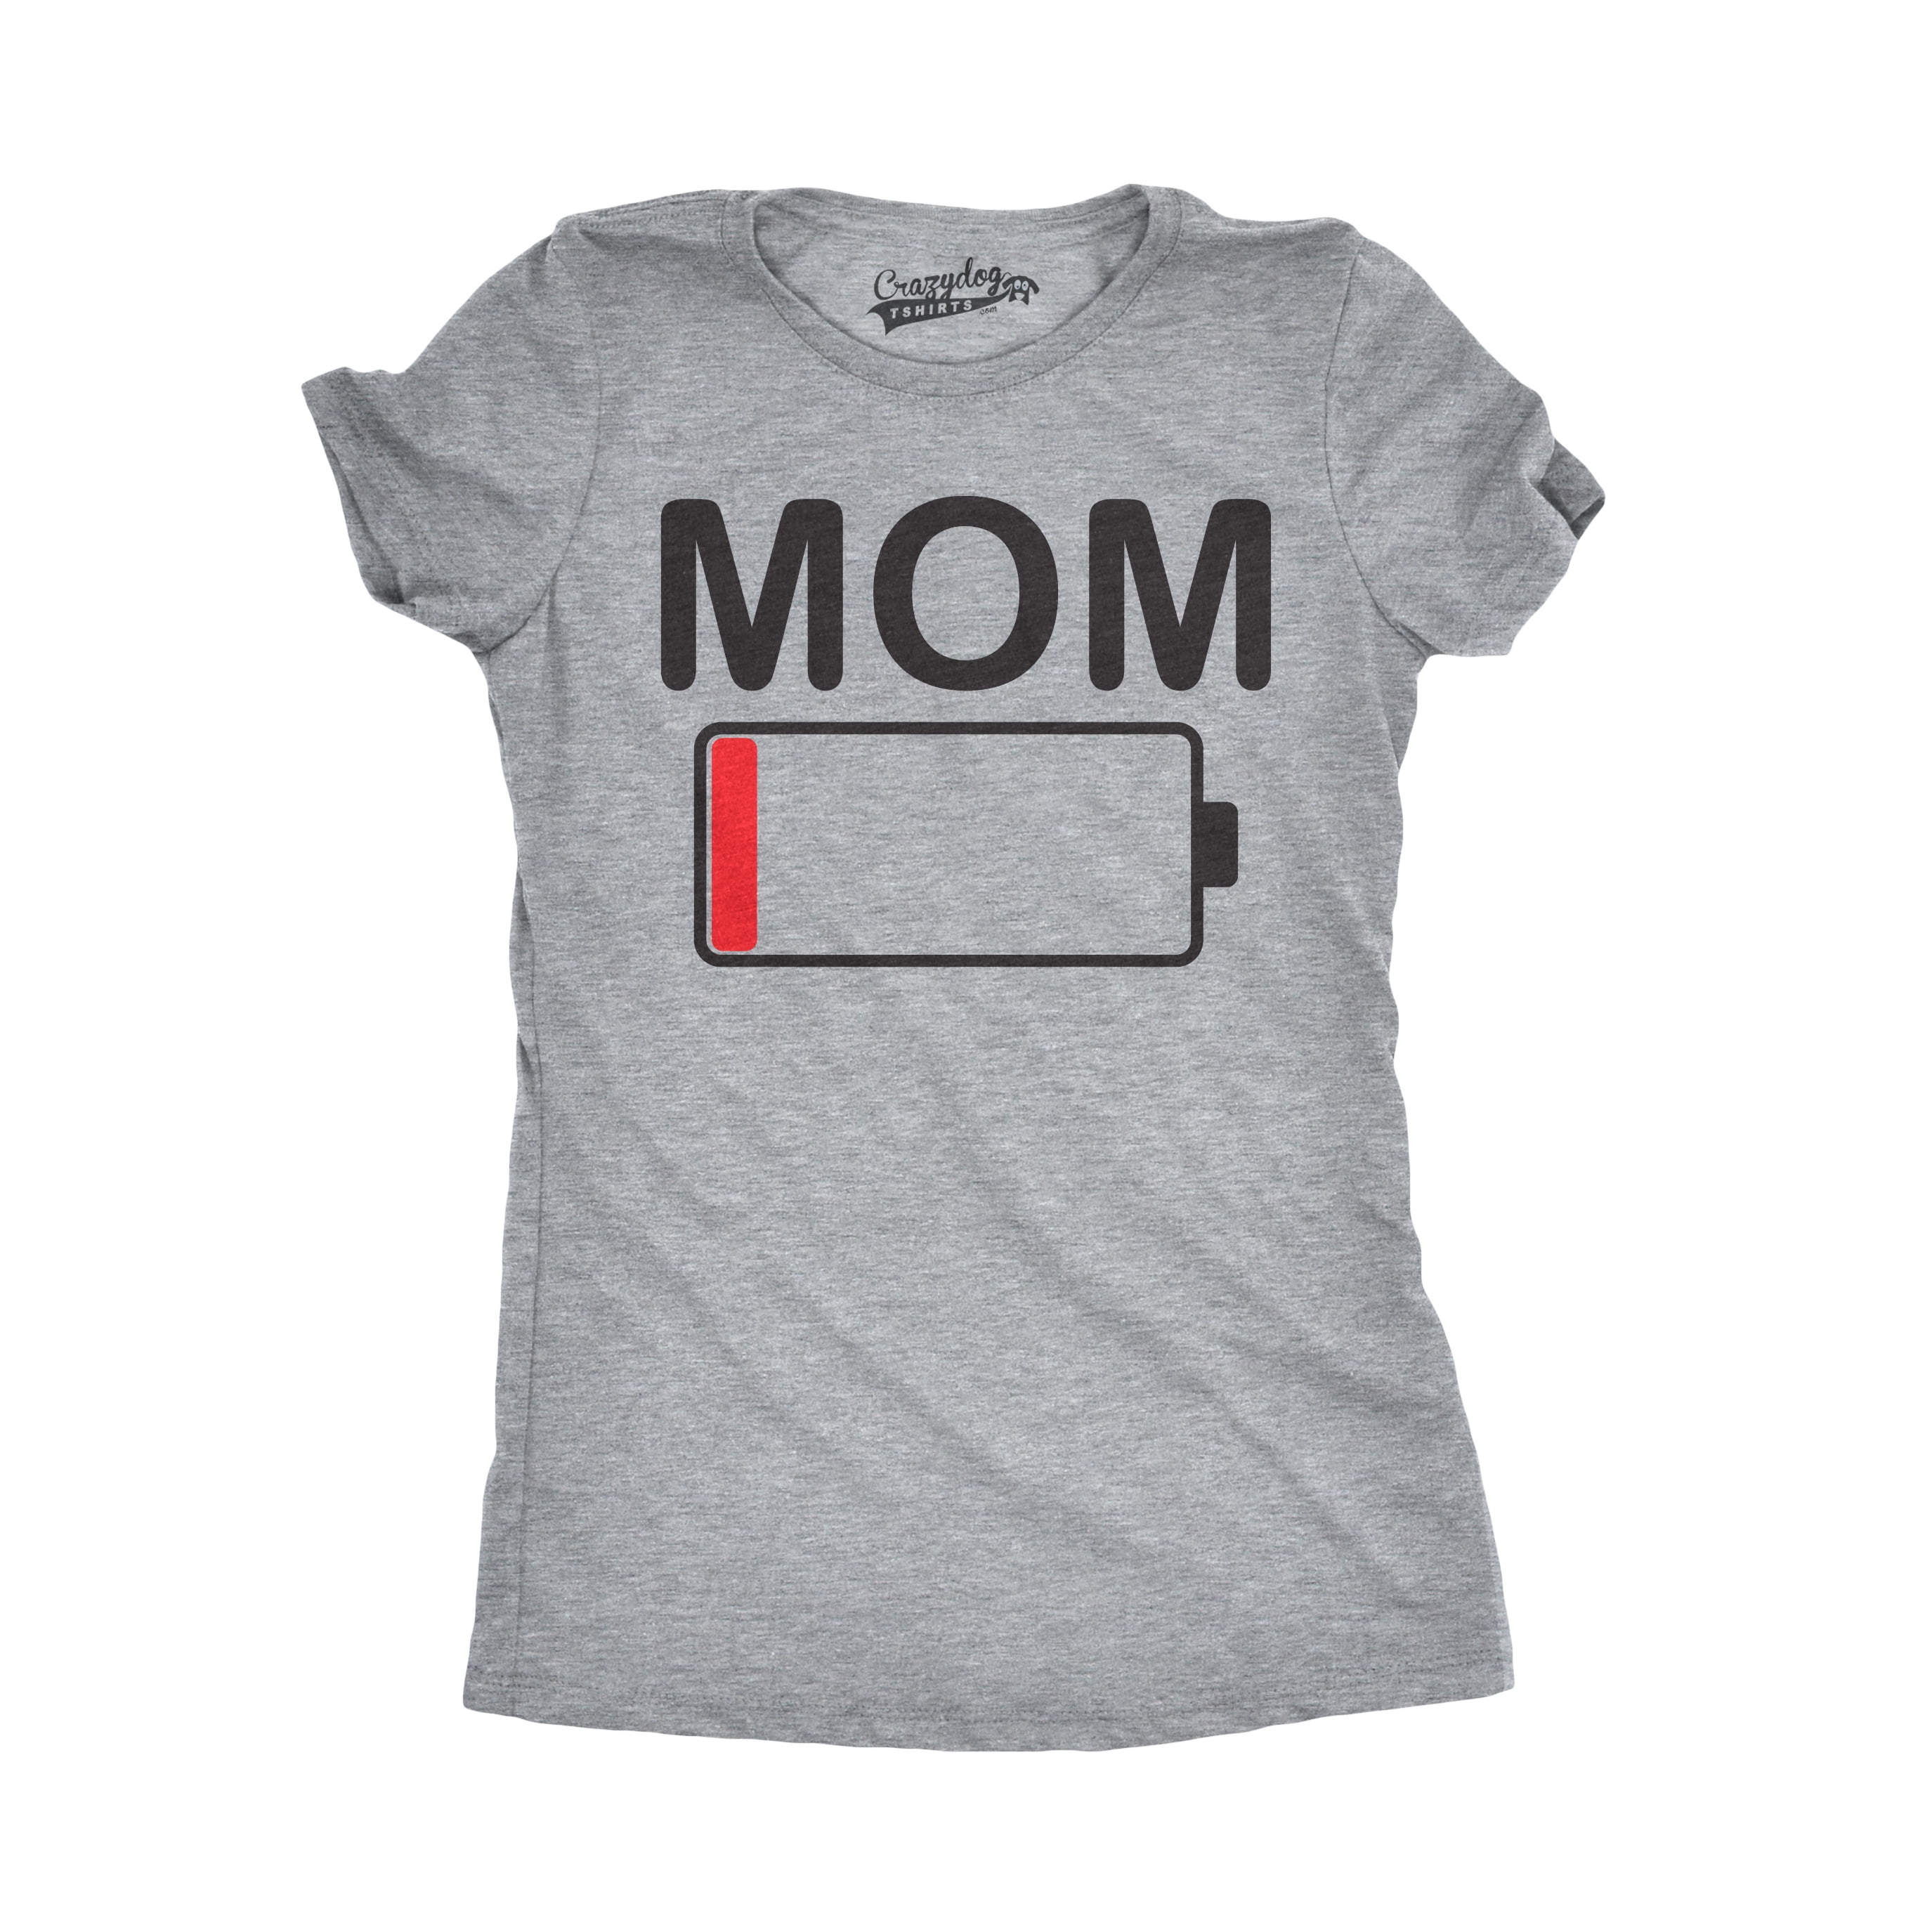 Mom Life Shirt Low Battery Mom Shirt New Mom T-Shirt Funny Mom Shirt Motherhood Shirt Exhausted Mother Outfit